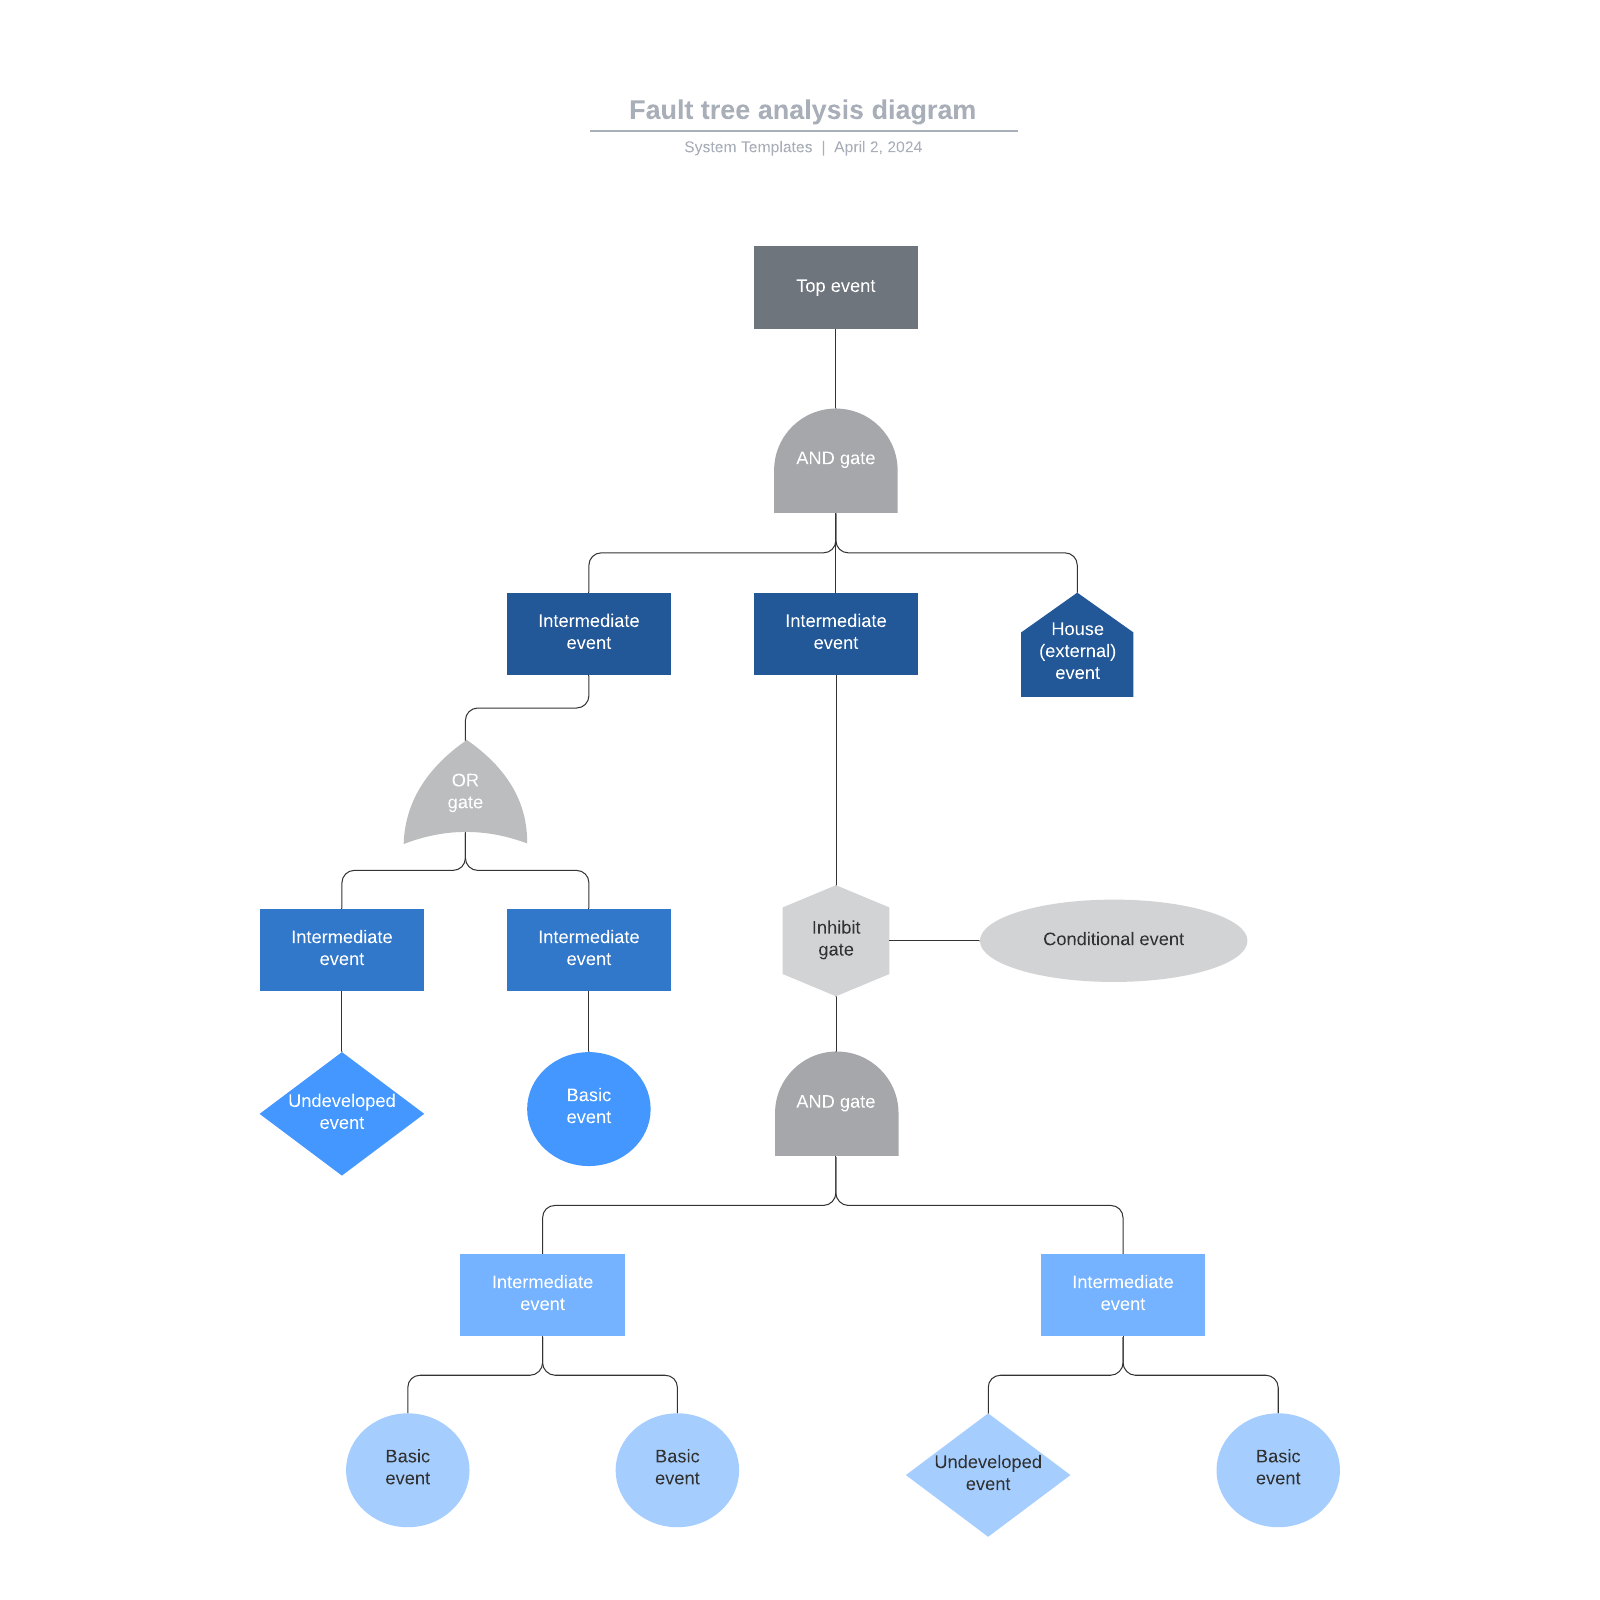 Fault tree analysis diagram example